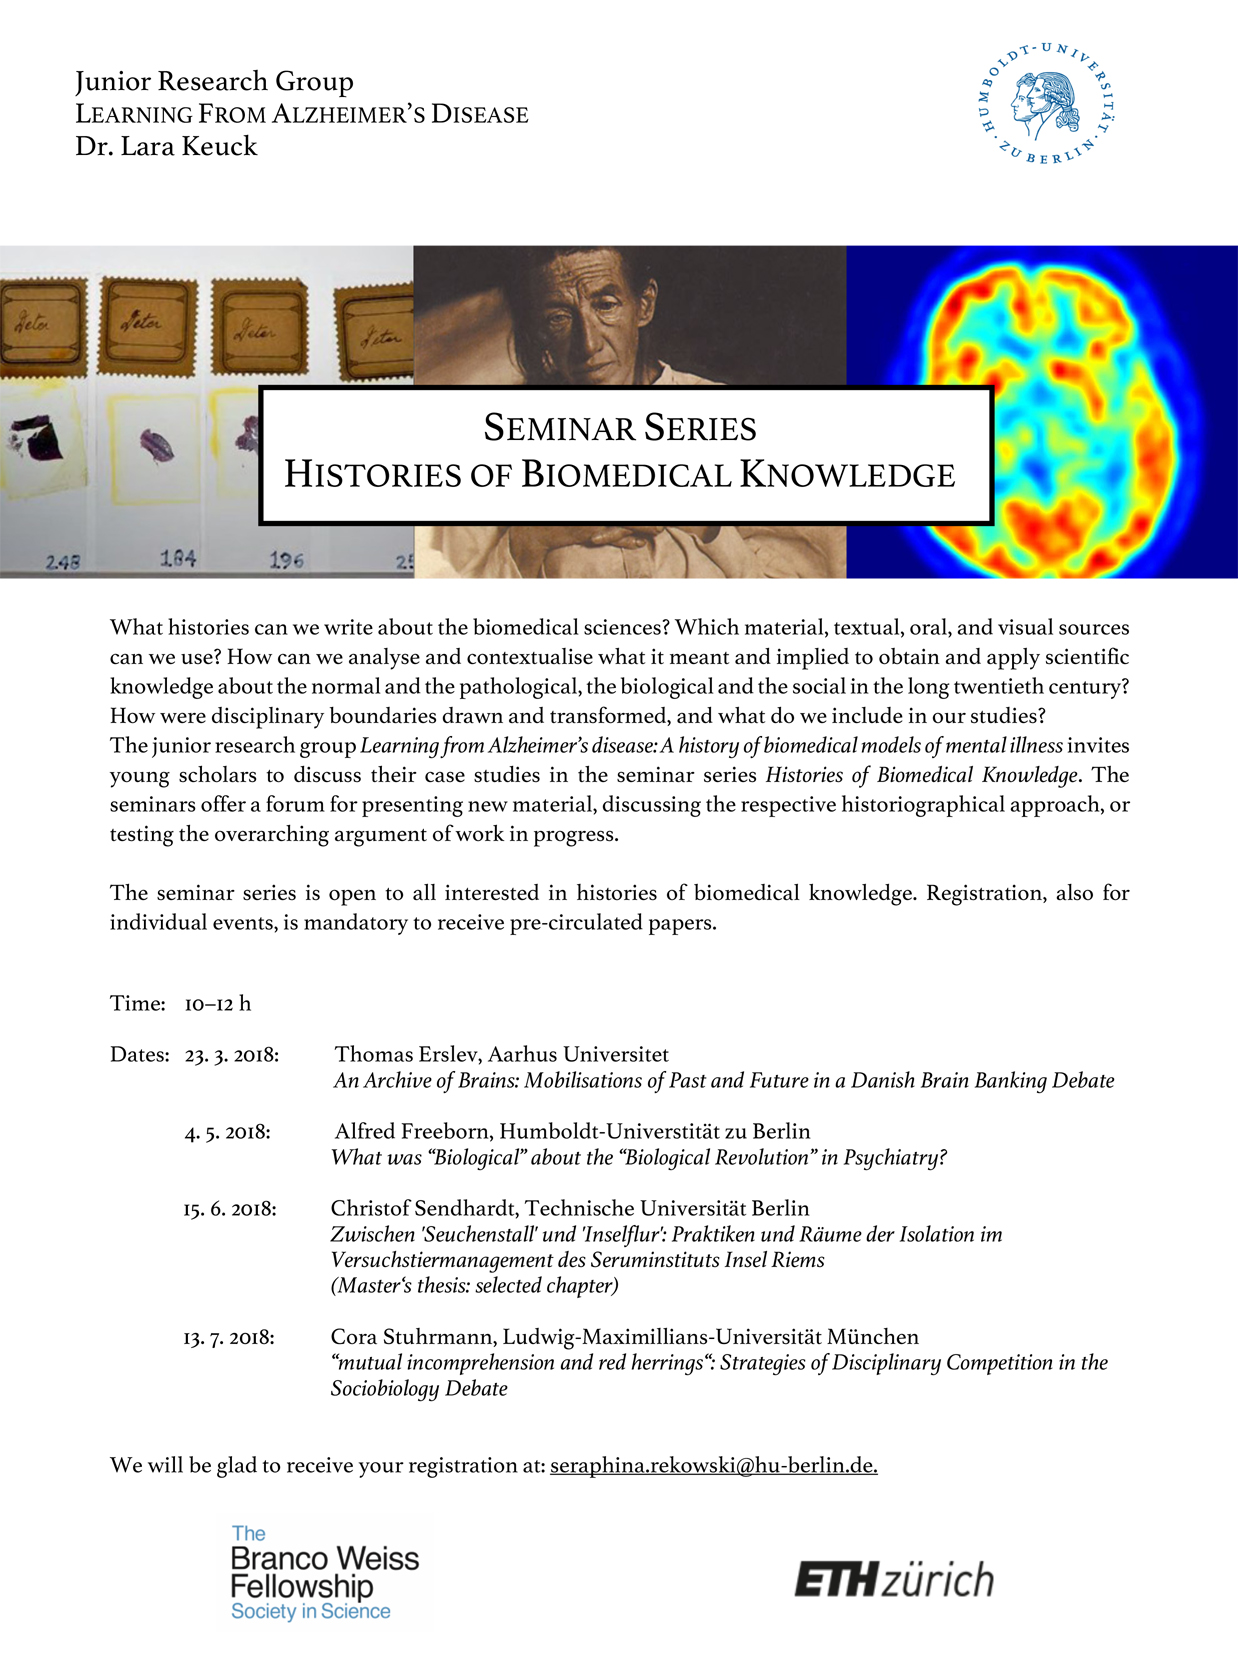 Aushang Histories of biomedical knowledge 150dpi